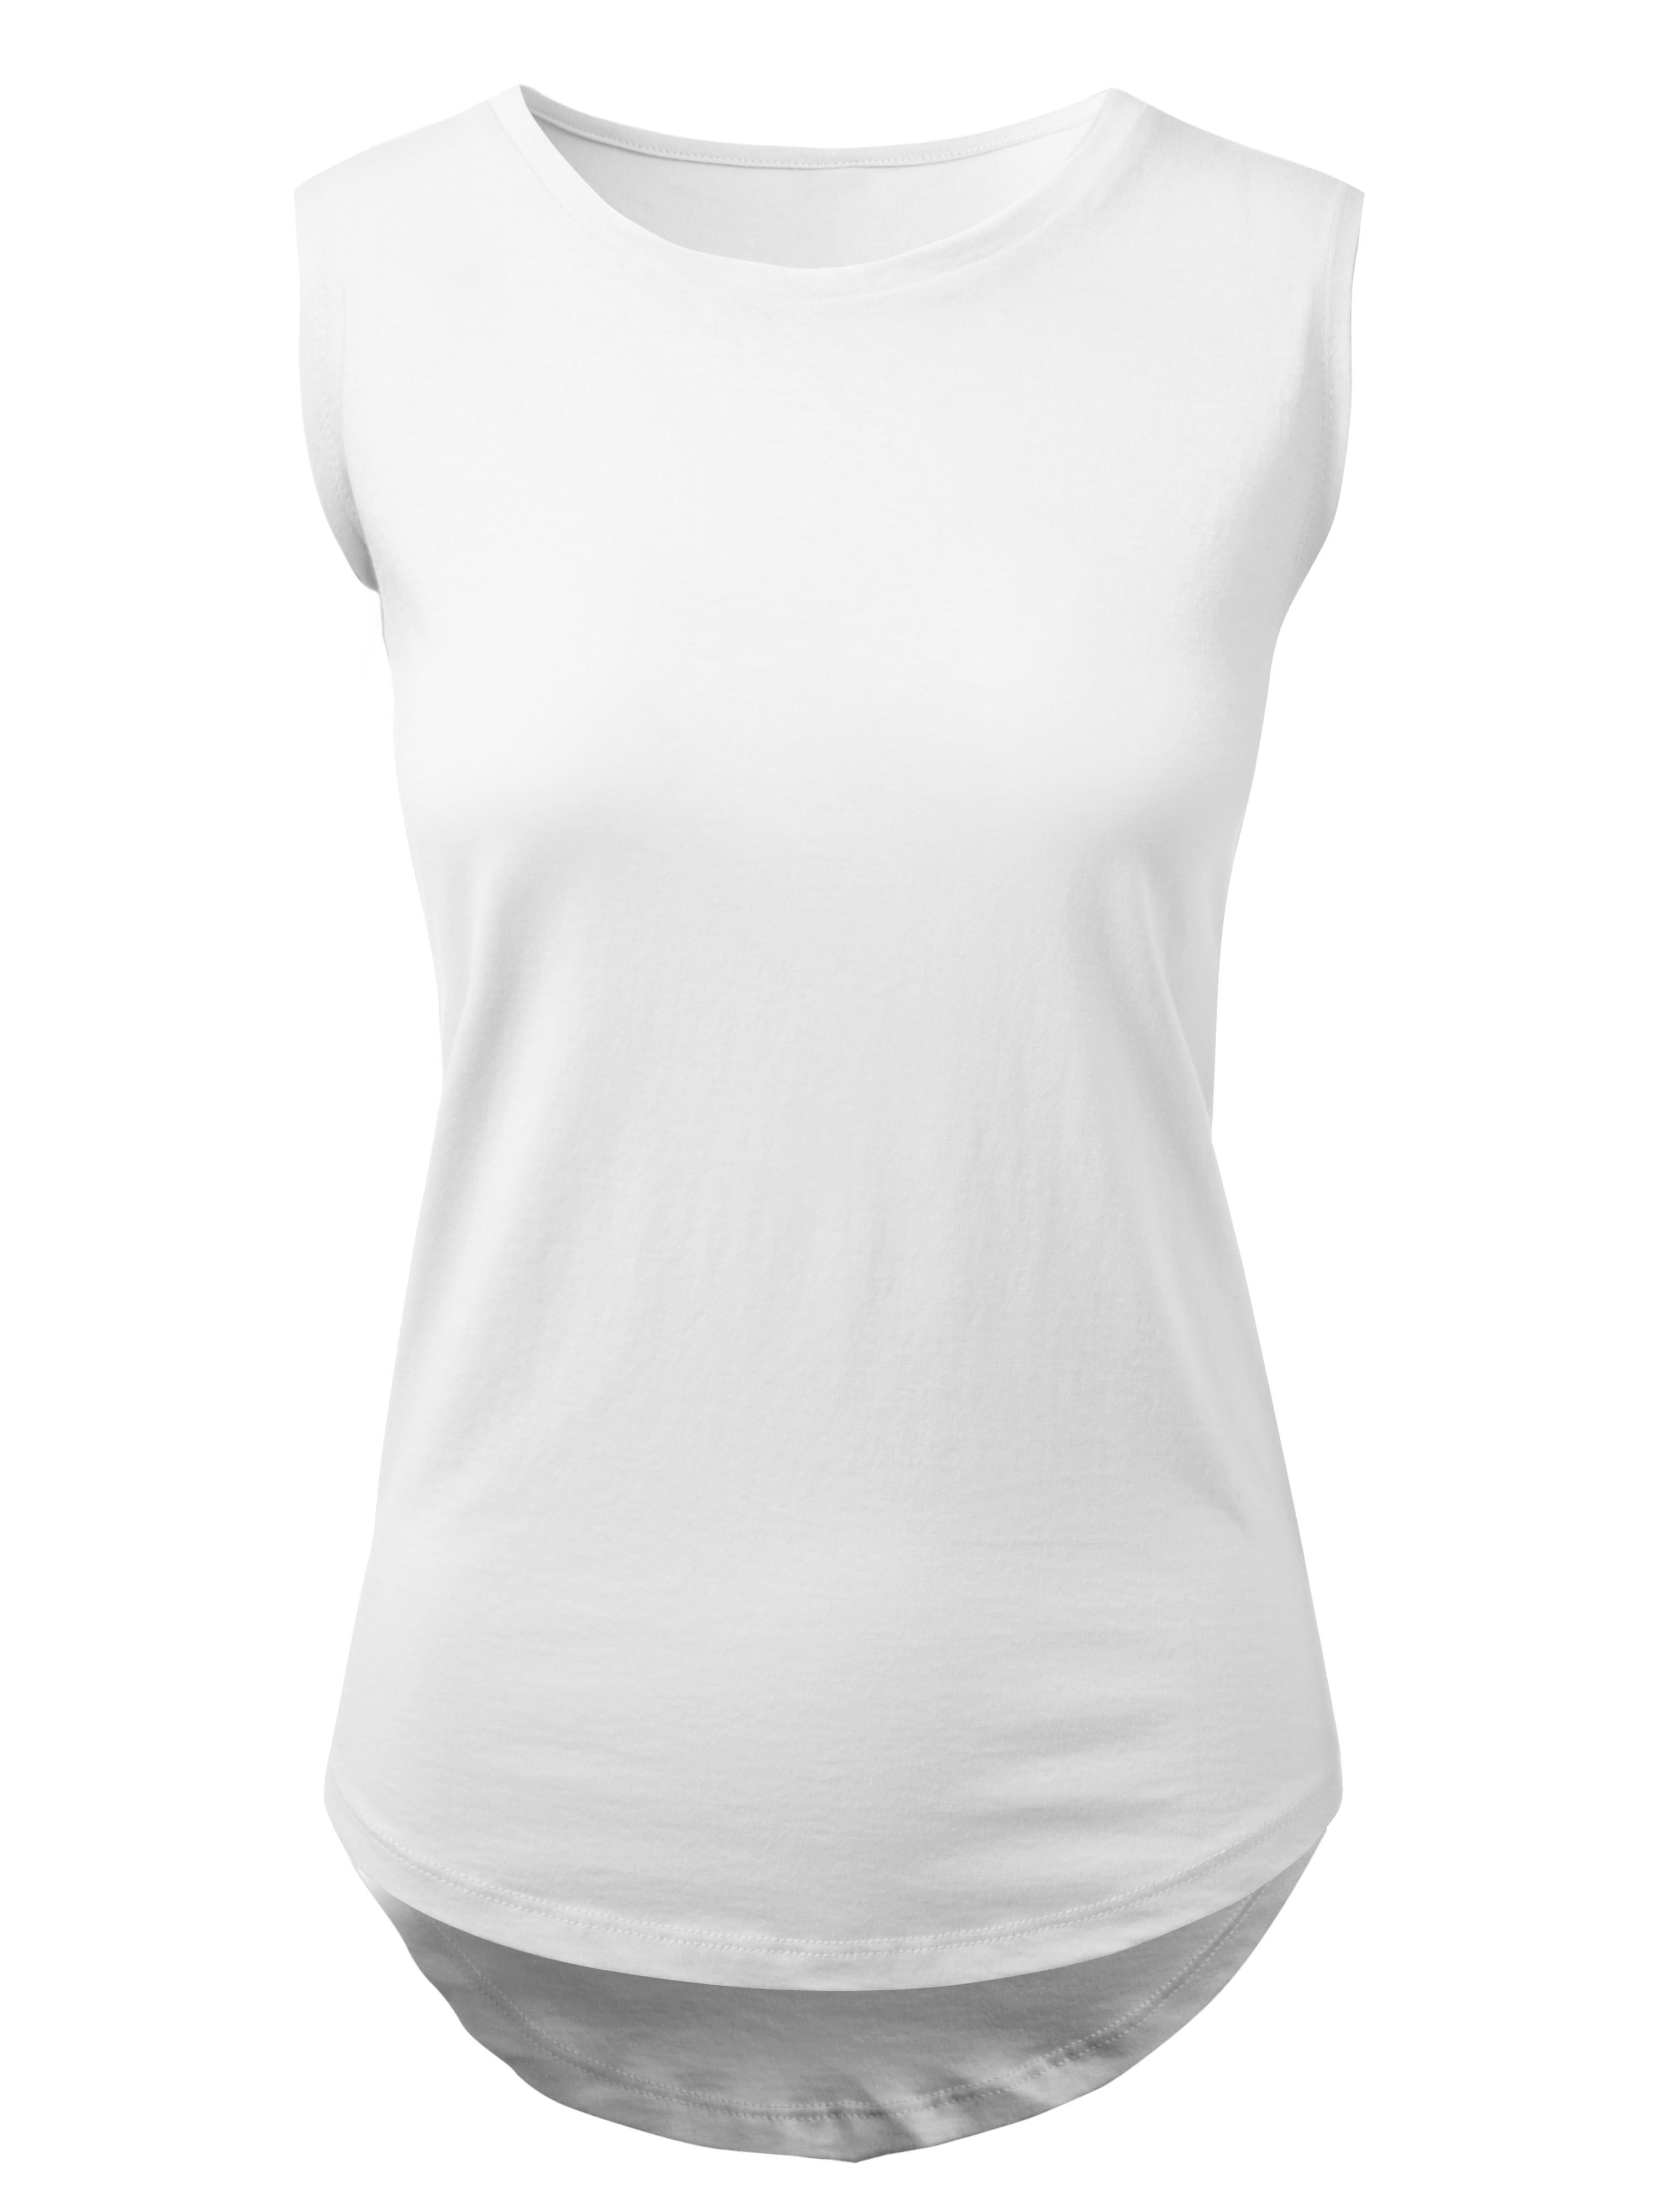 Under $70 White Miler Tank Tops & Sleeveless Shirts.